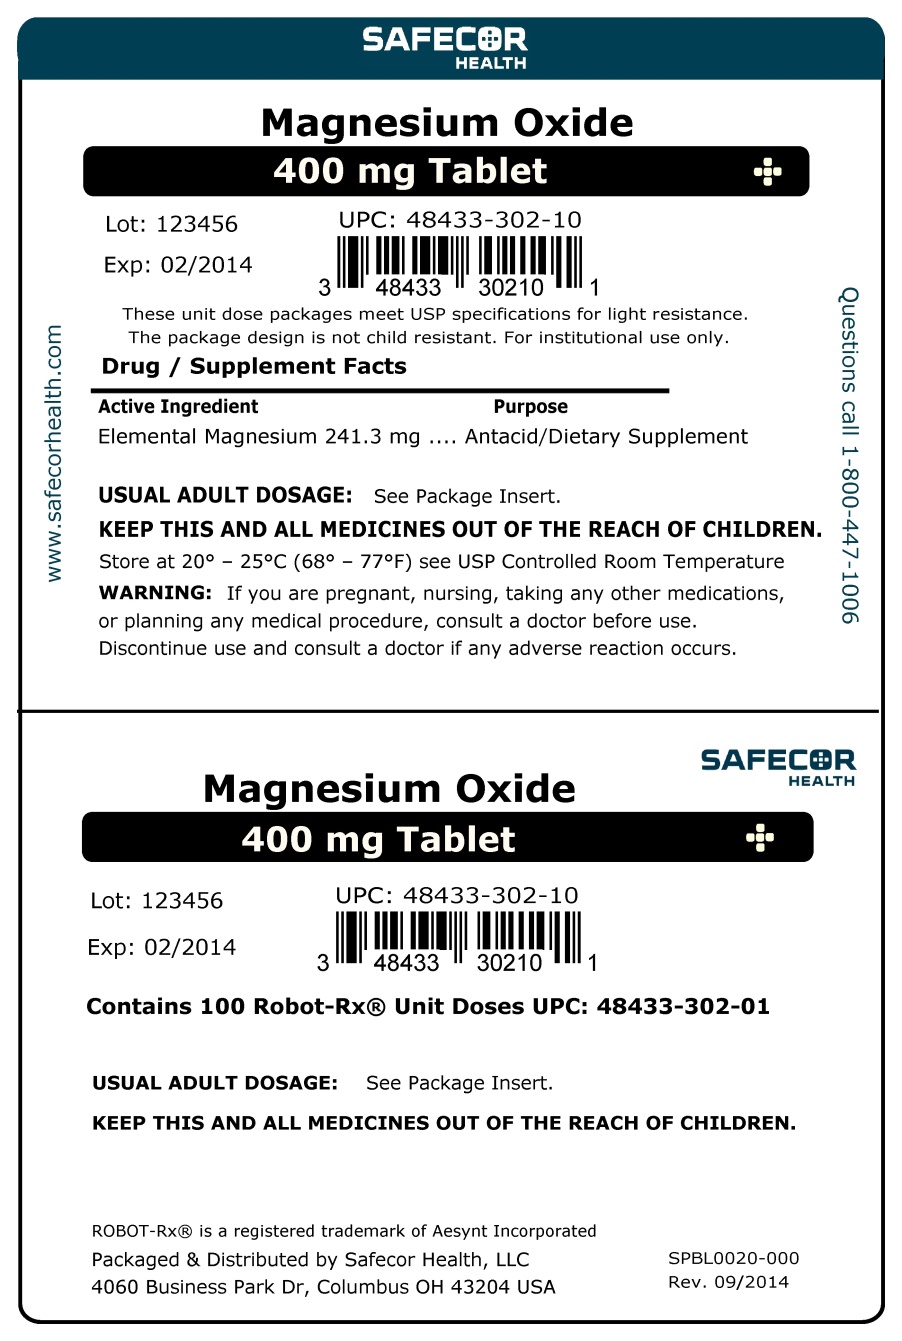 Magnesium Oxide 400 mg Robot Unit Dose Box Label